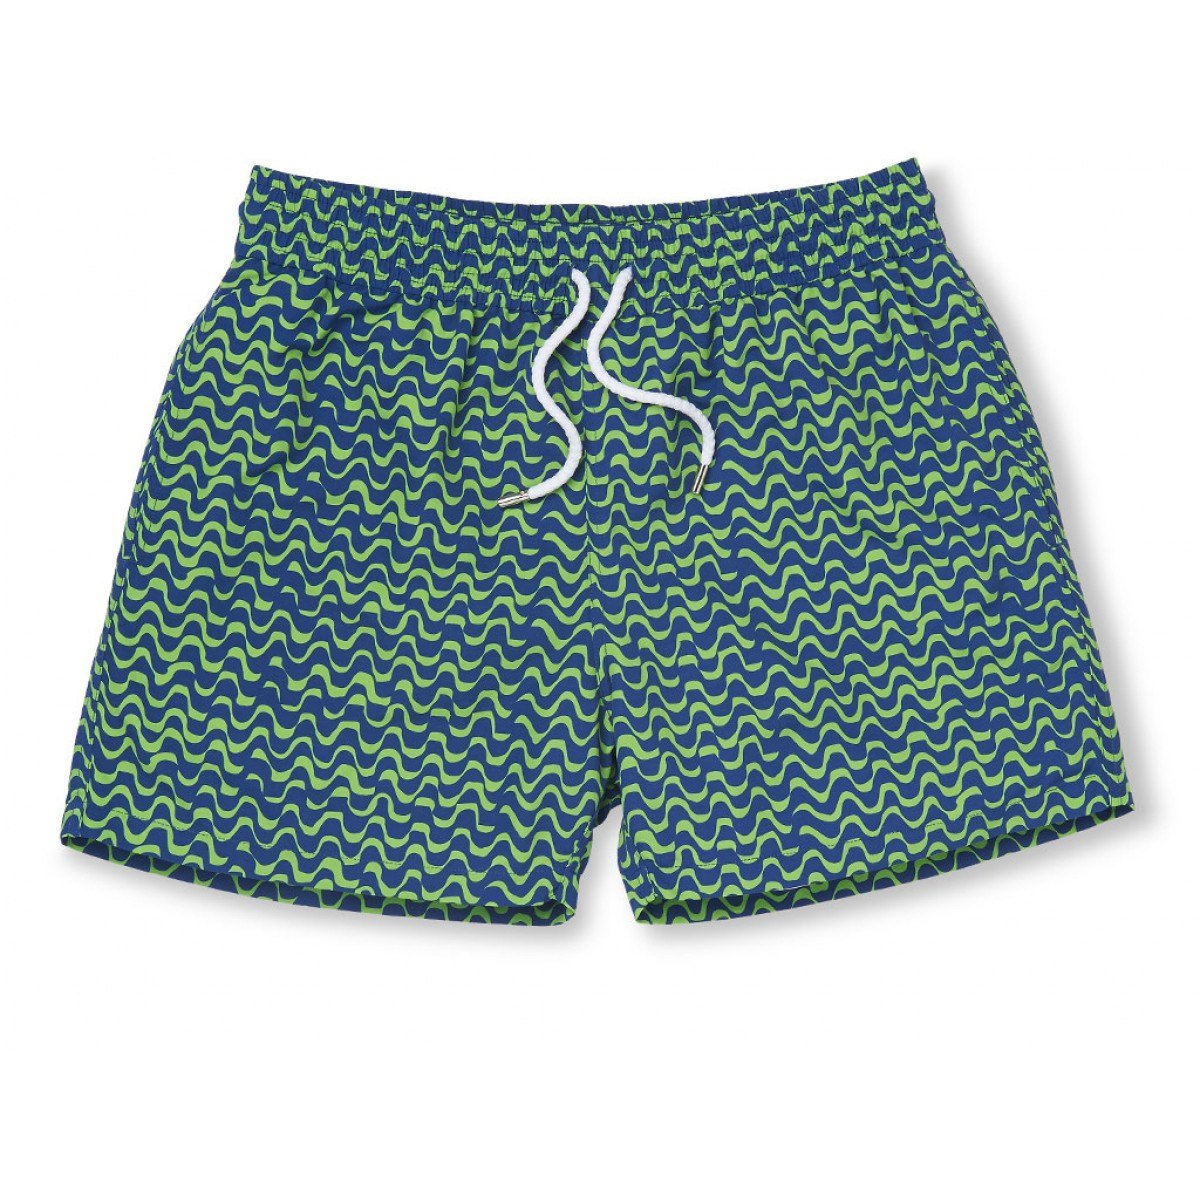 FRESCOBOL CARIOCA Frescobol Trunks Sport Shorts Wave Bossa - Coconut Green/Navy, S